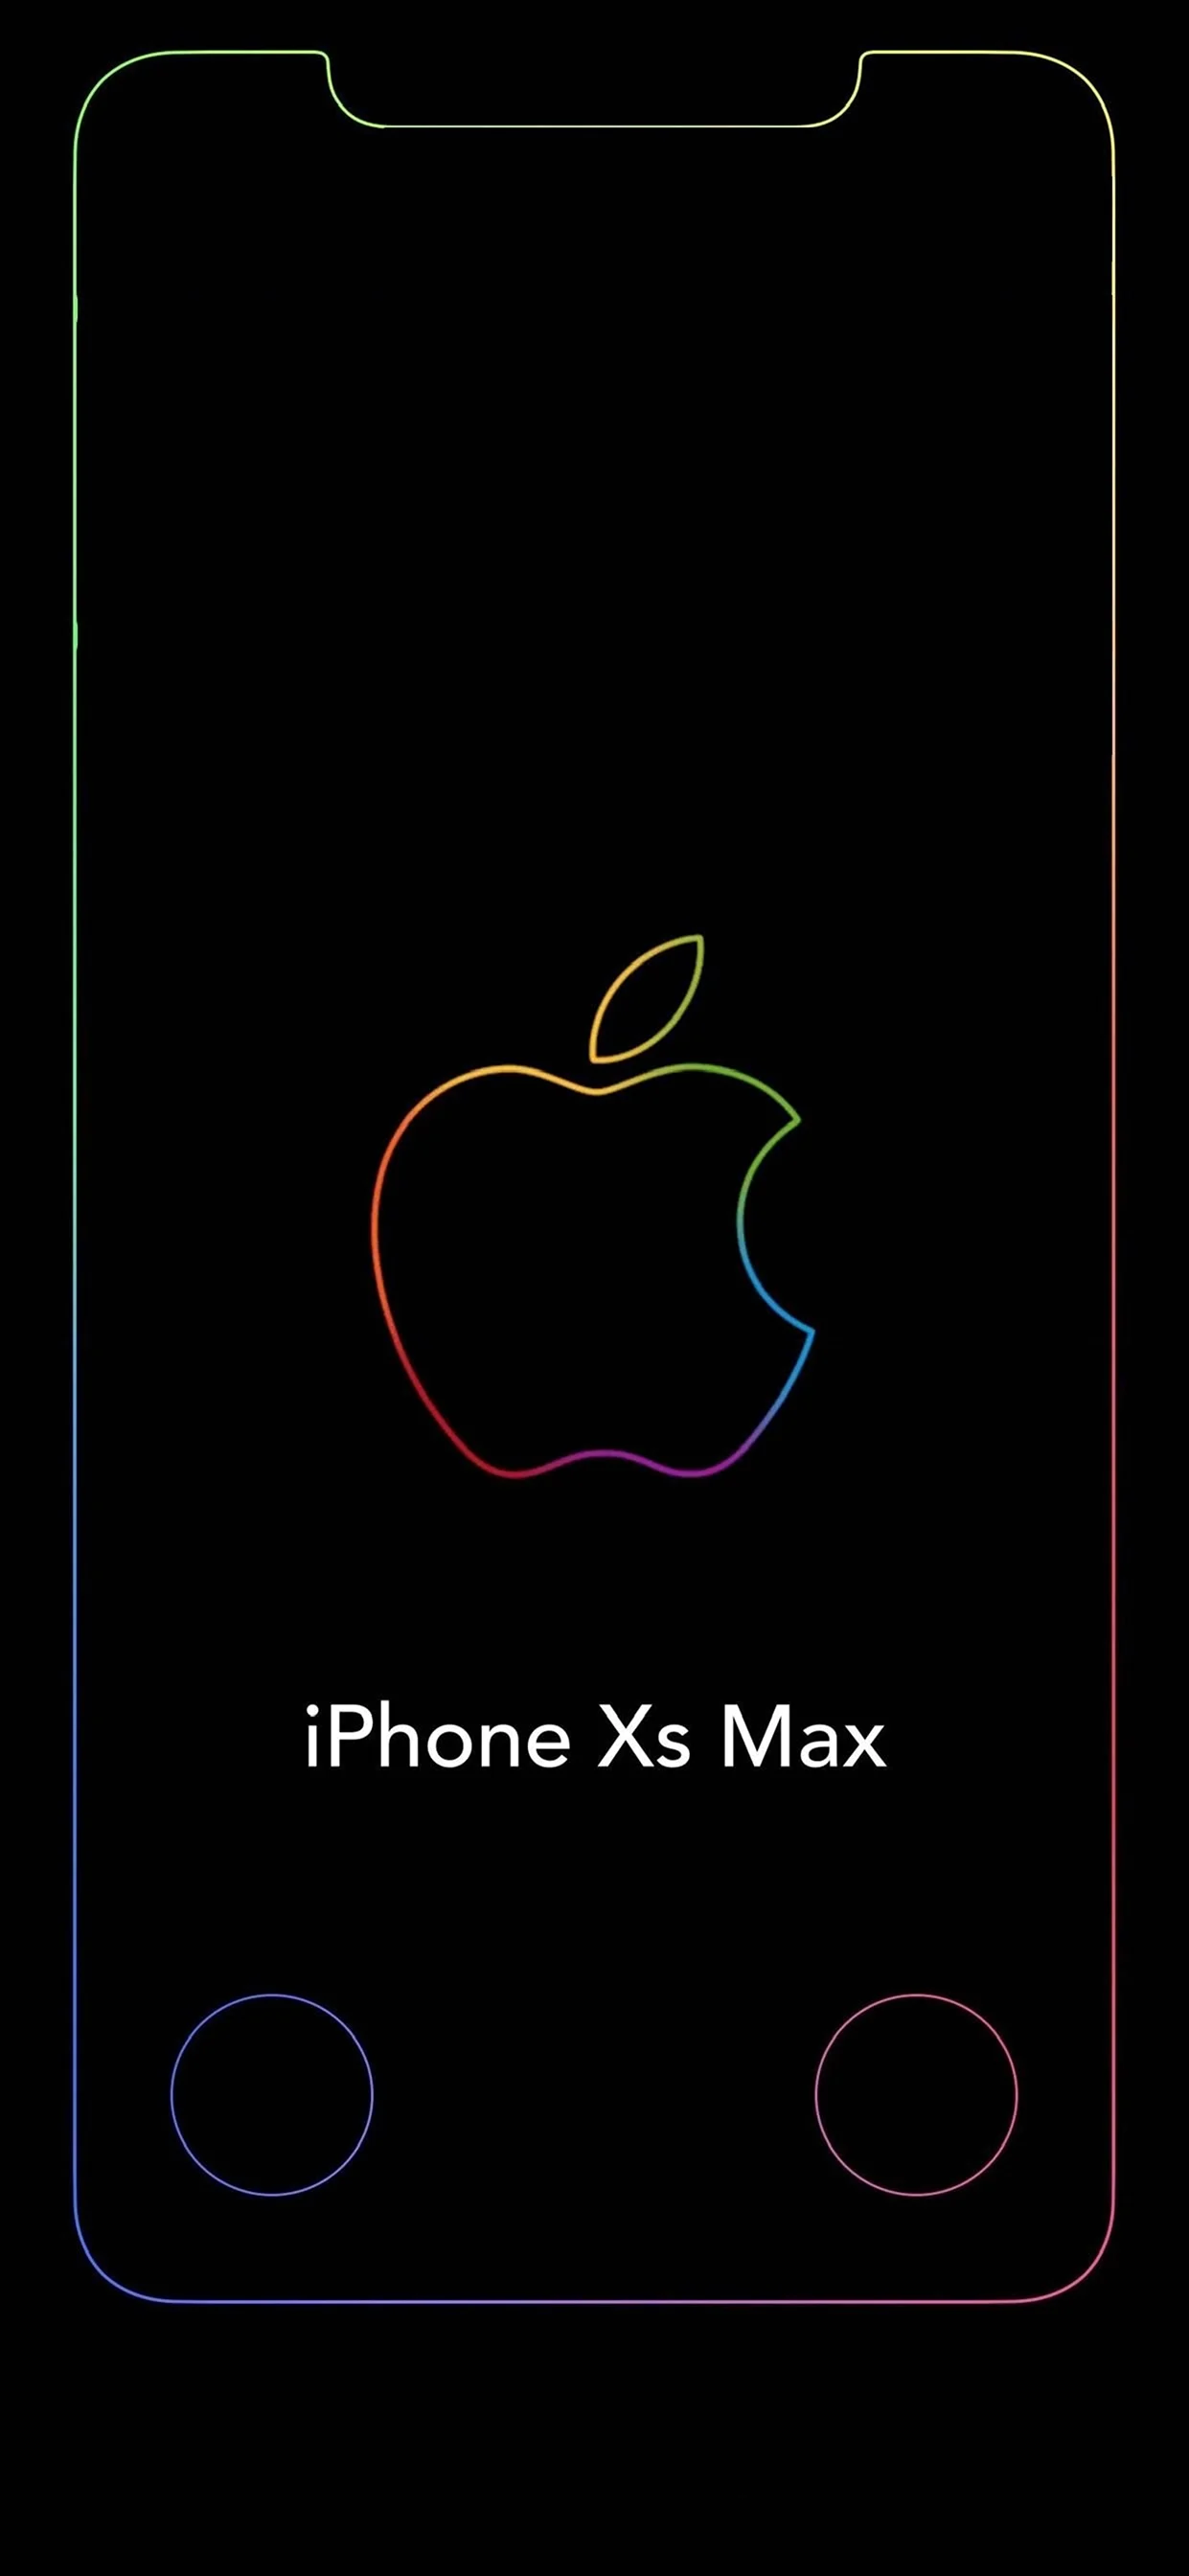 Айфон XS Max экран блокировки